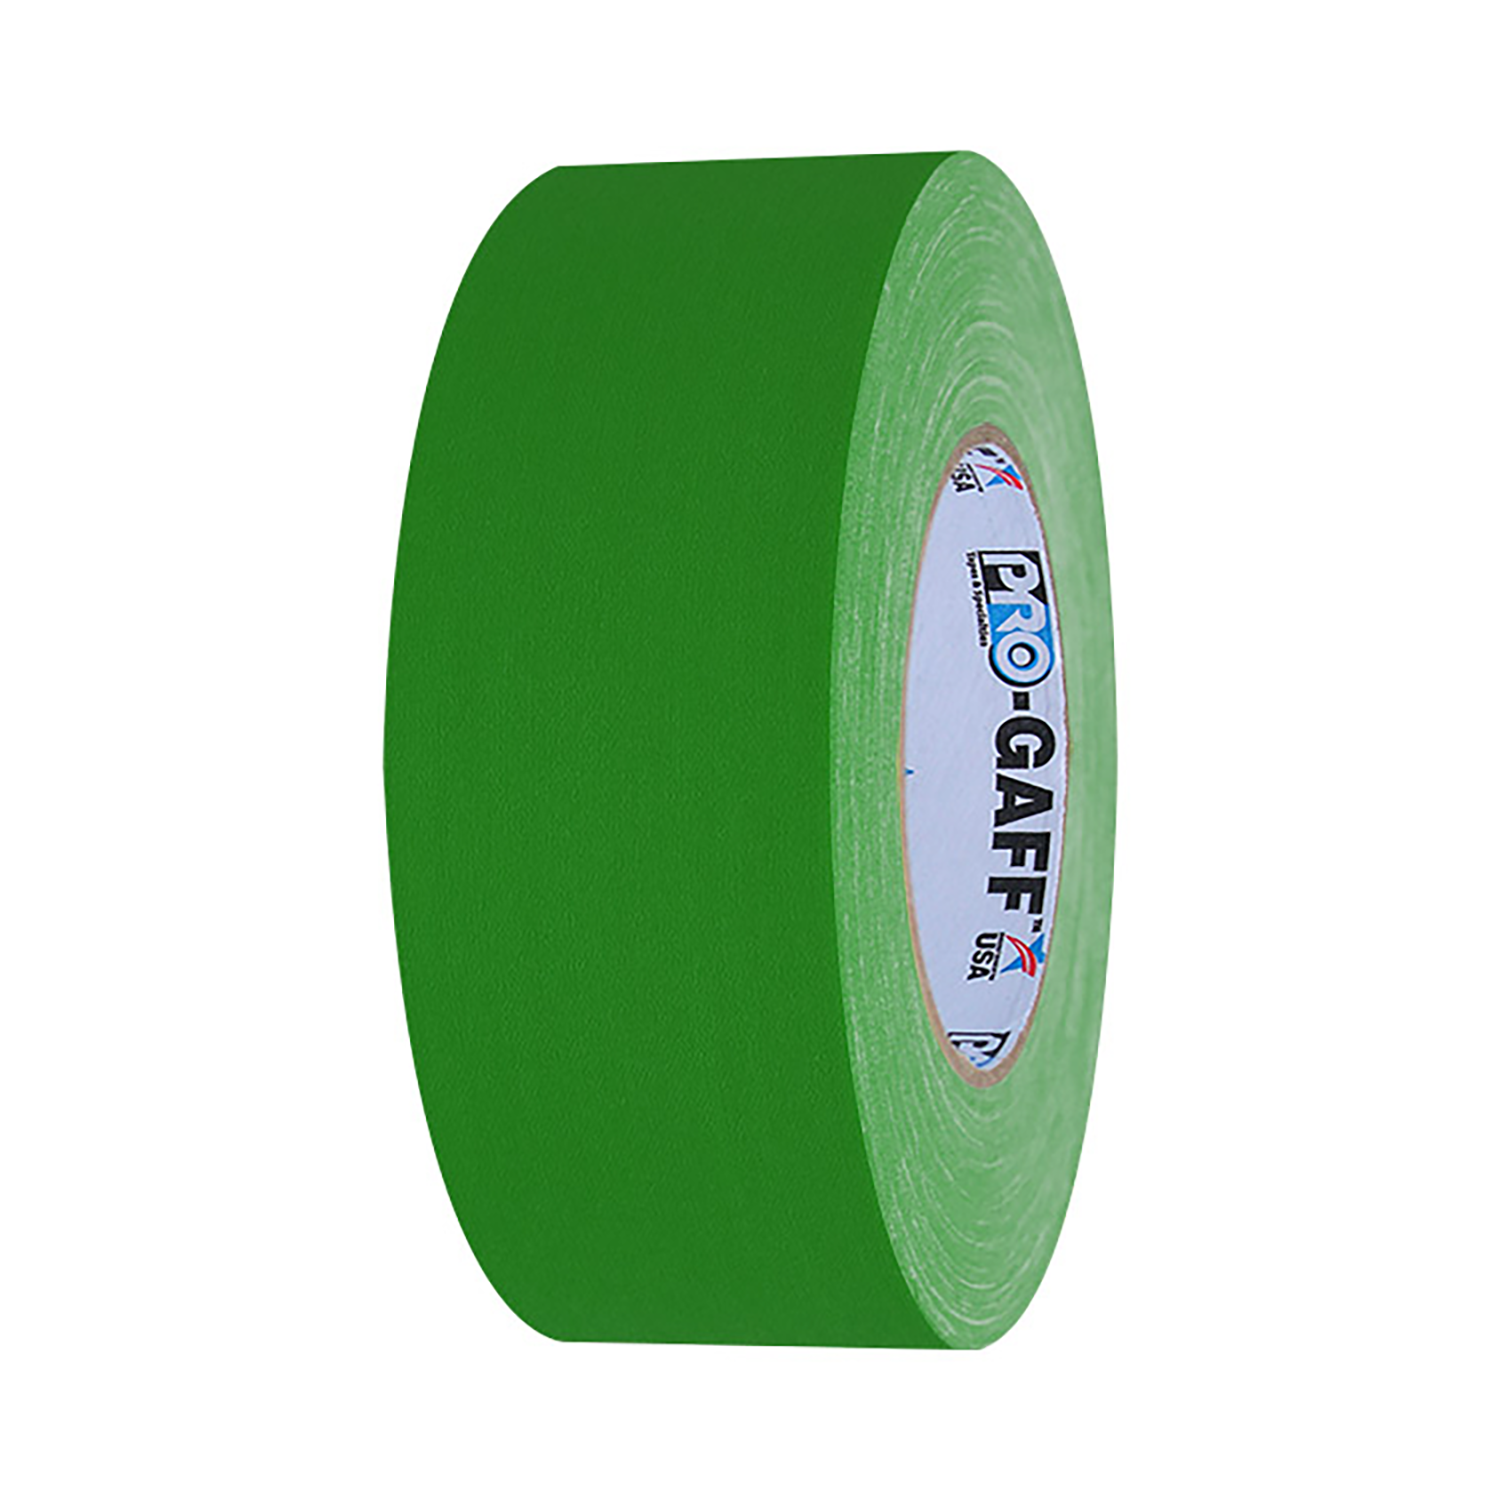 Pro Gaff Tape Cloth - Fluorescent Chroma Green - 50 Yards - 2"